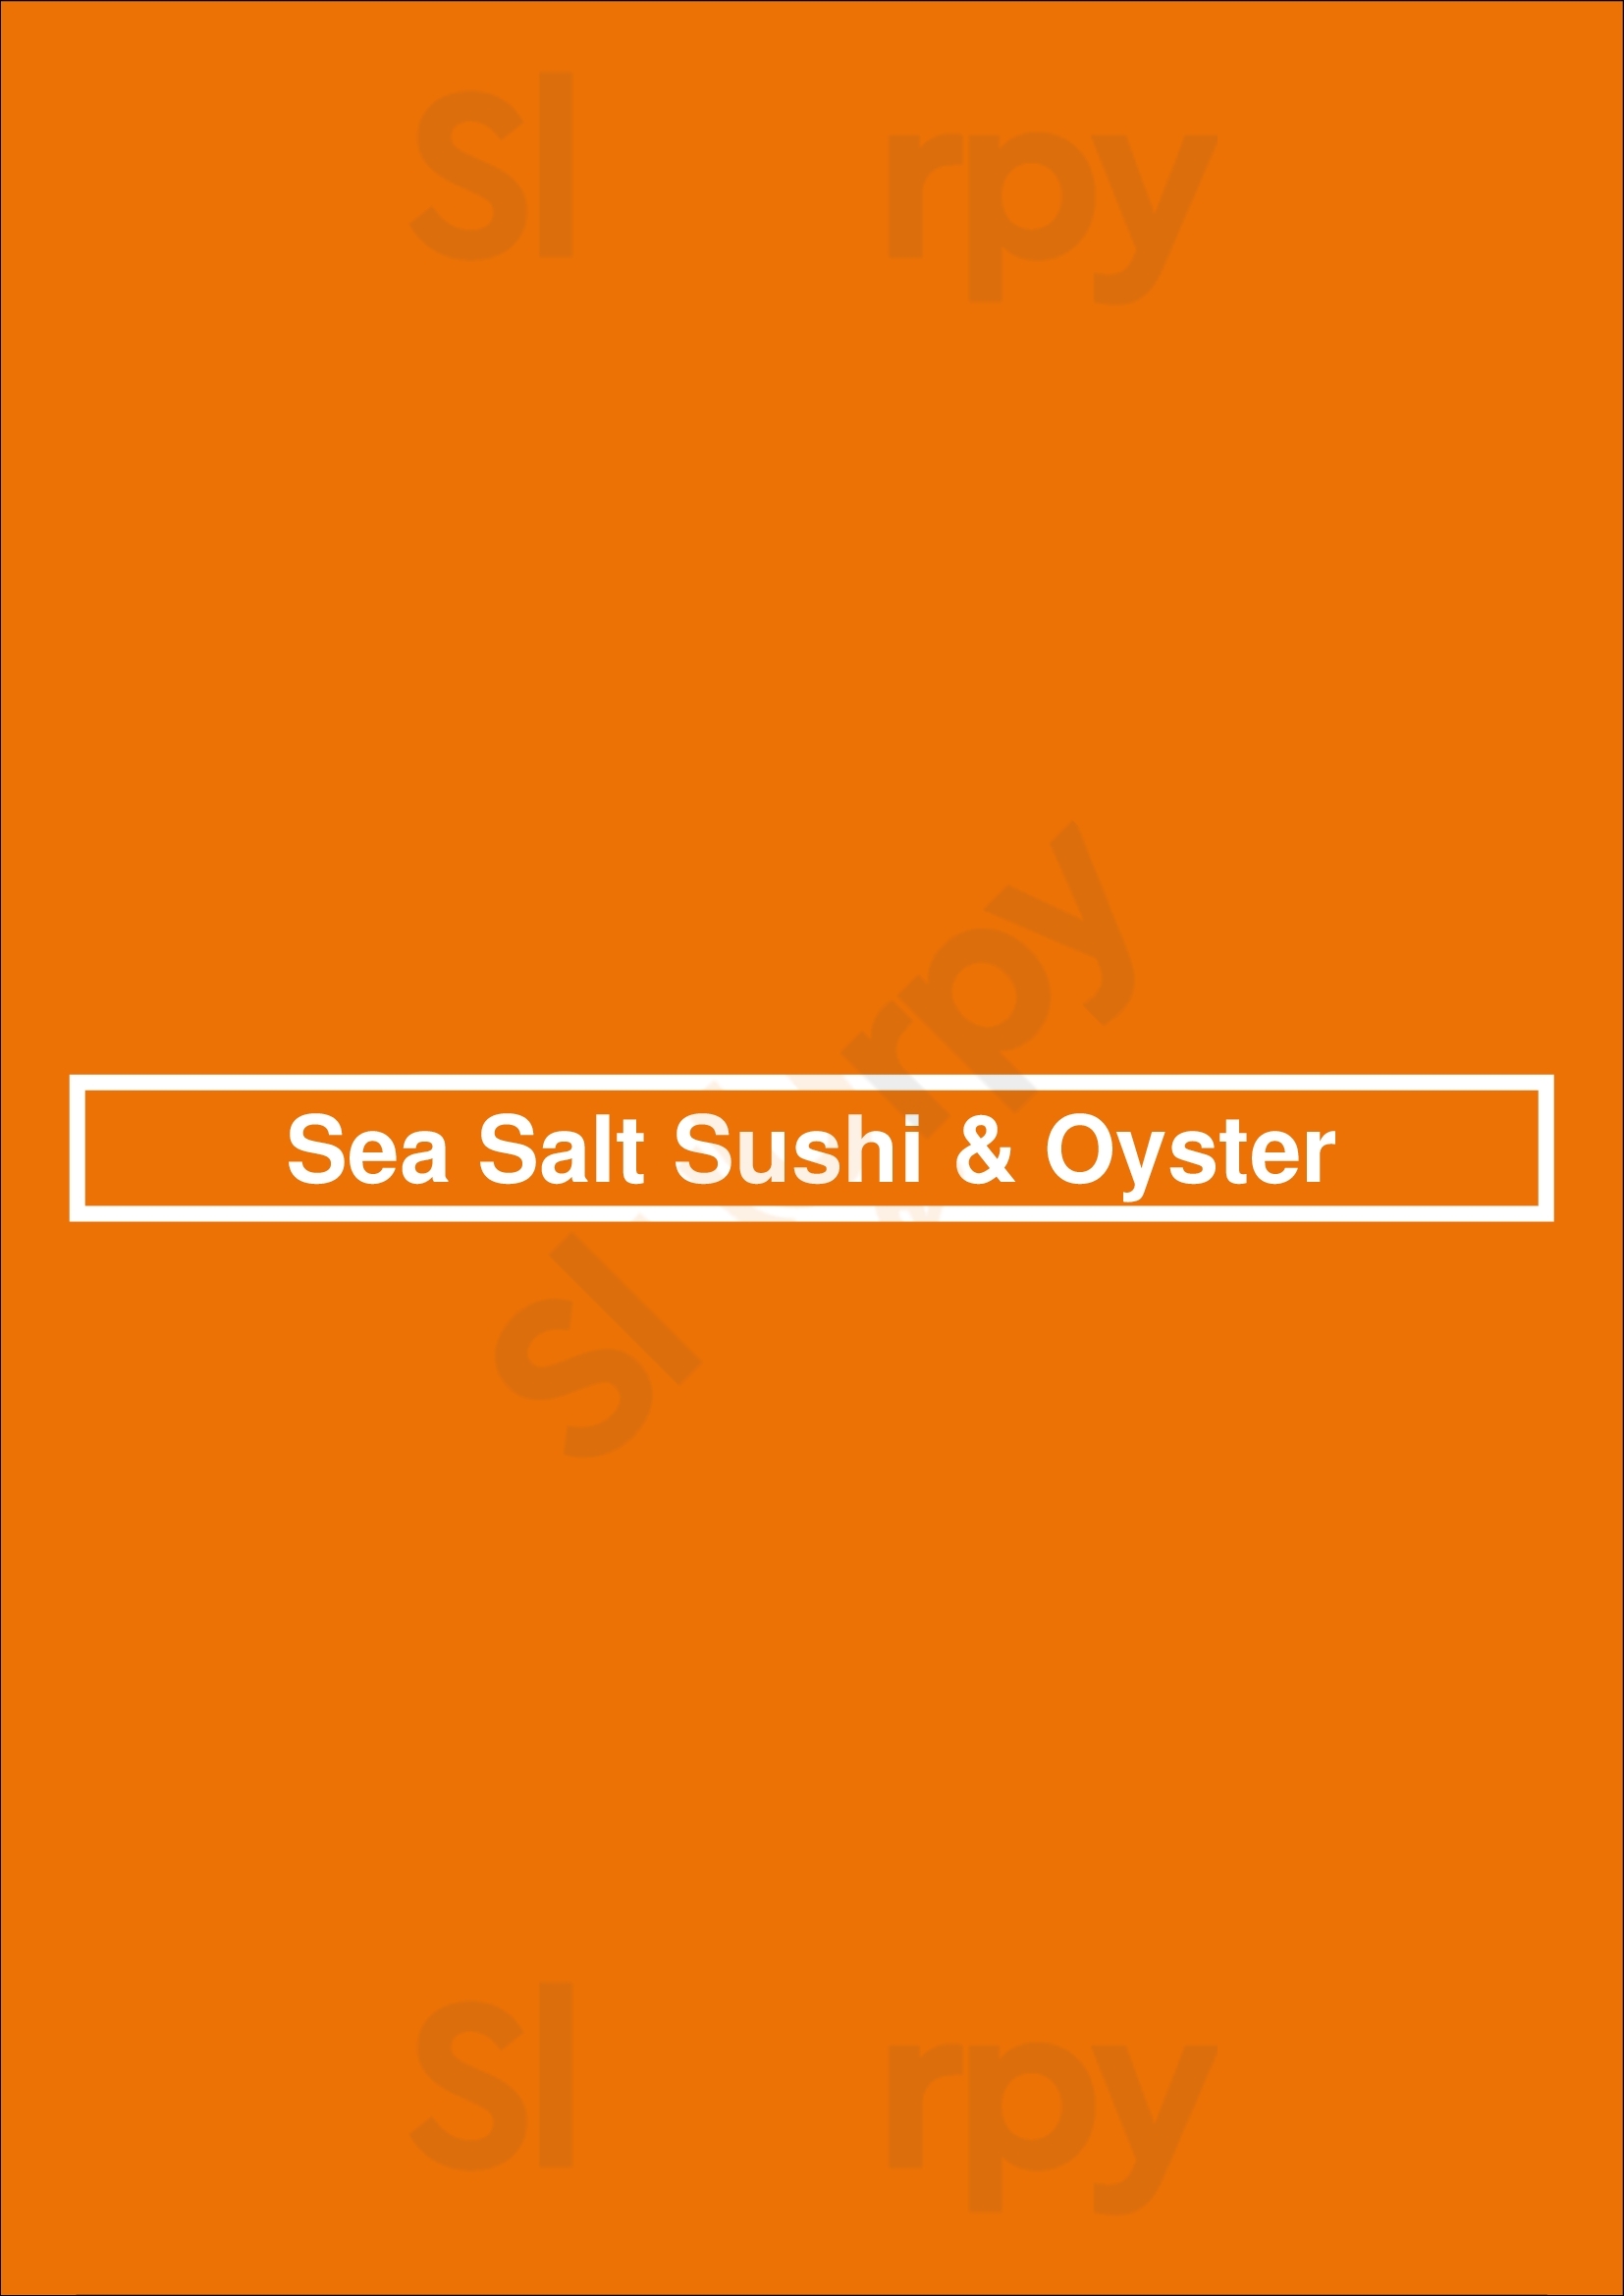 Sea Salt Sushi & Oyster Las Vegas Menu - 1